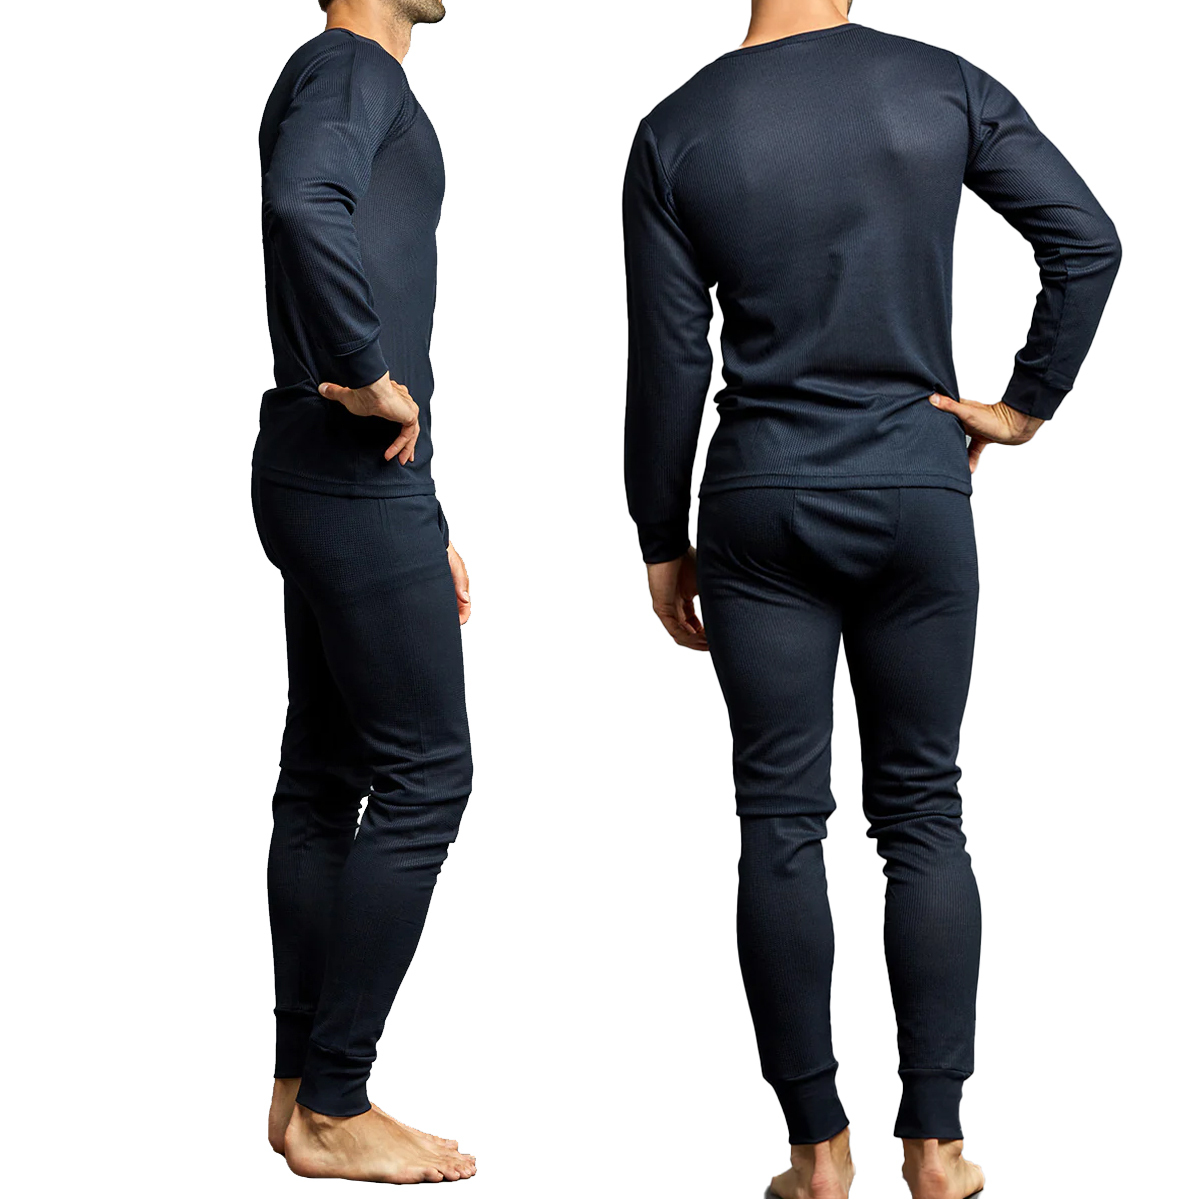 Wholesale Men's Navy Thermal Underwear in Medium - DollarDays